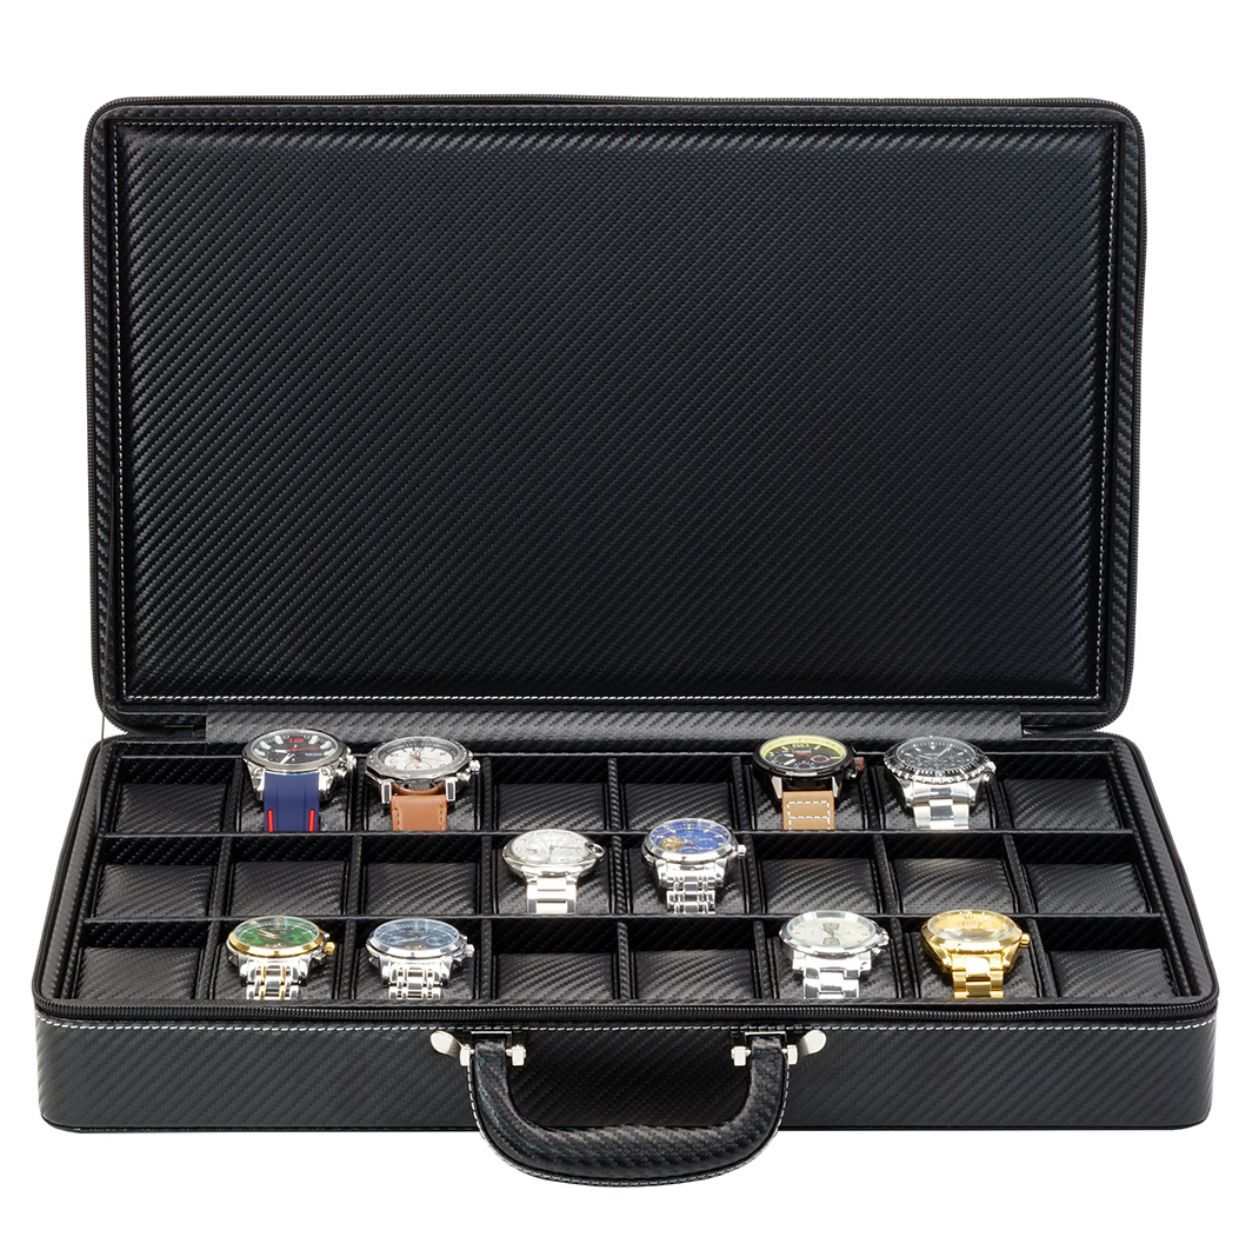 TIMELYBUYS 24 Slot Watch Briefcase Black Carbon Fiber Zippered Travel Storage Case